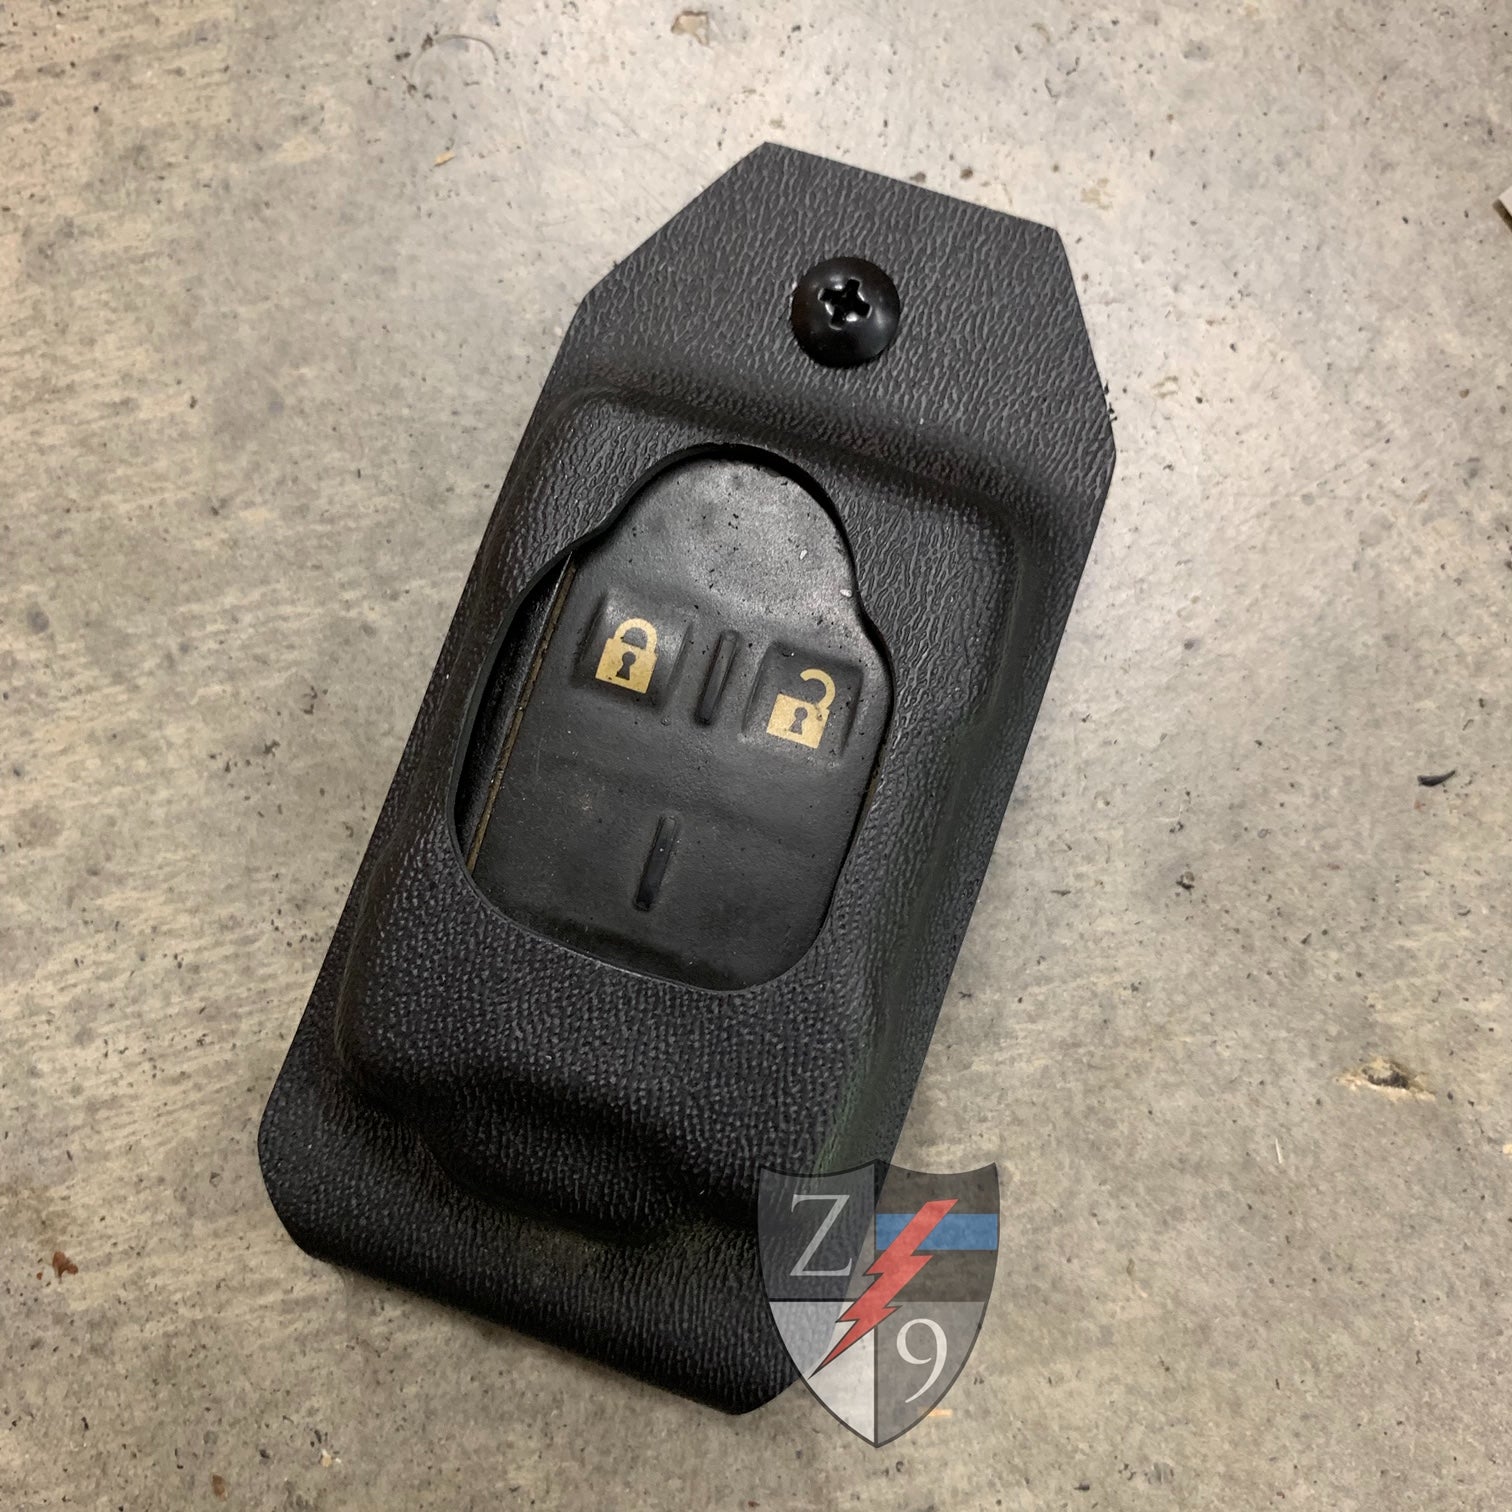 Ford Key Fob Holder – High Order Tactical